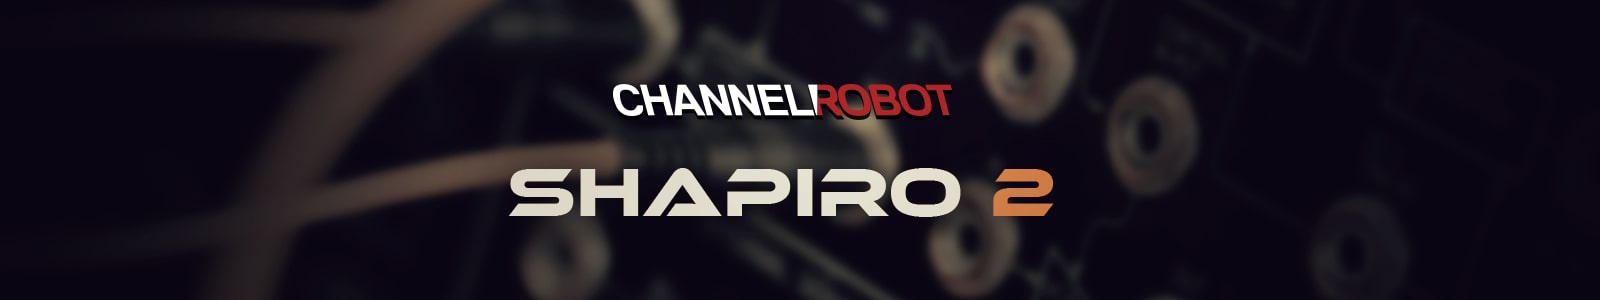 shapiro 2 by channel robot